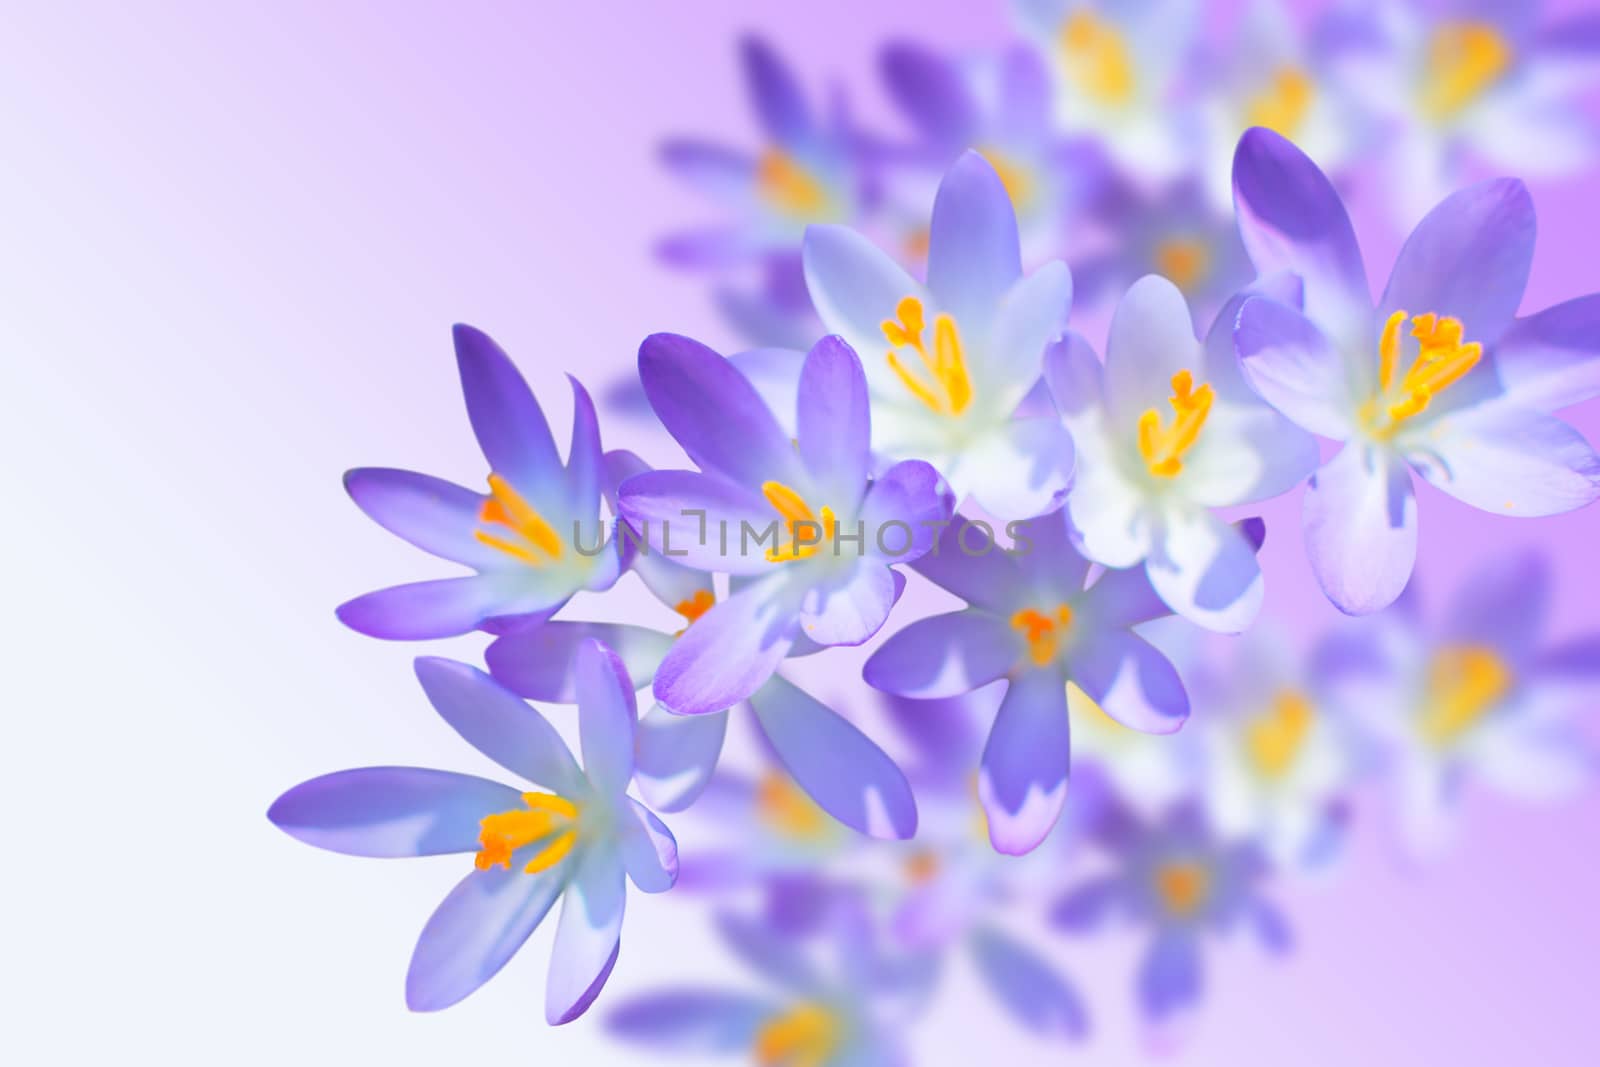 Alpine crocuses spring flowers on blurred background by servickuz